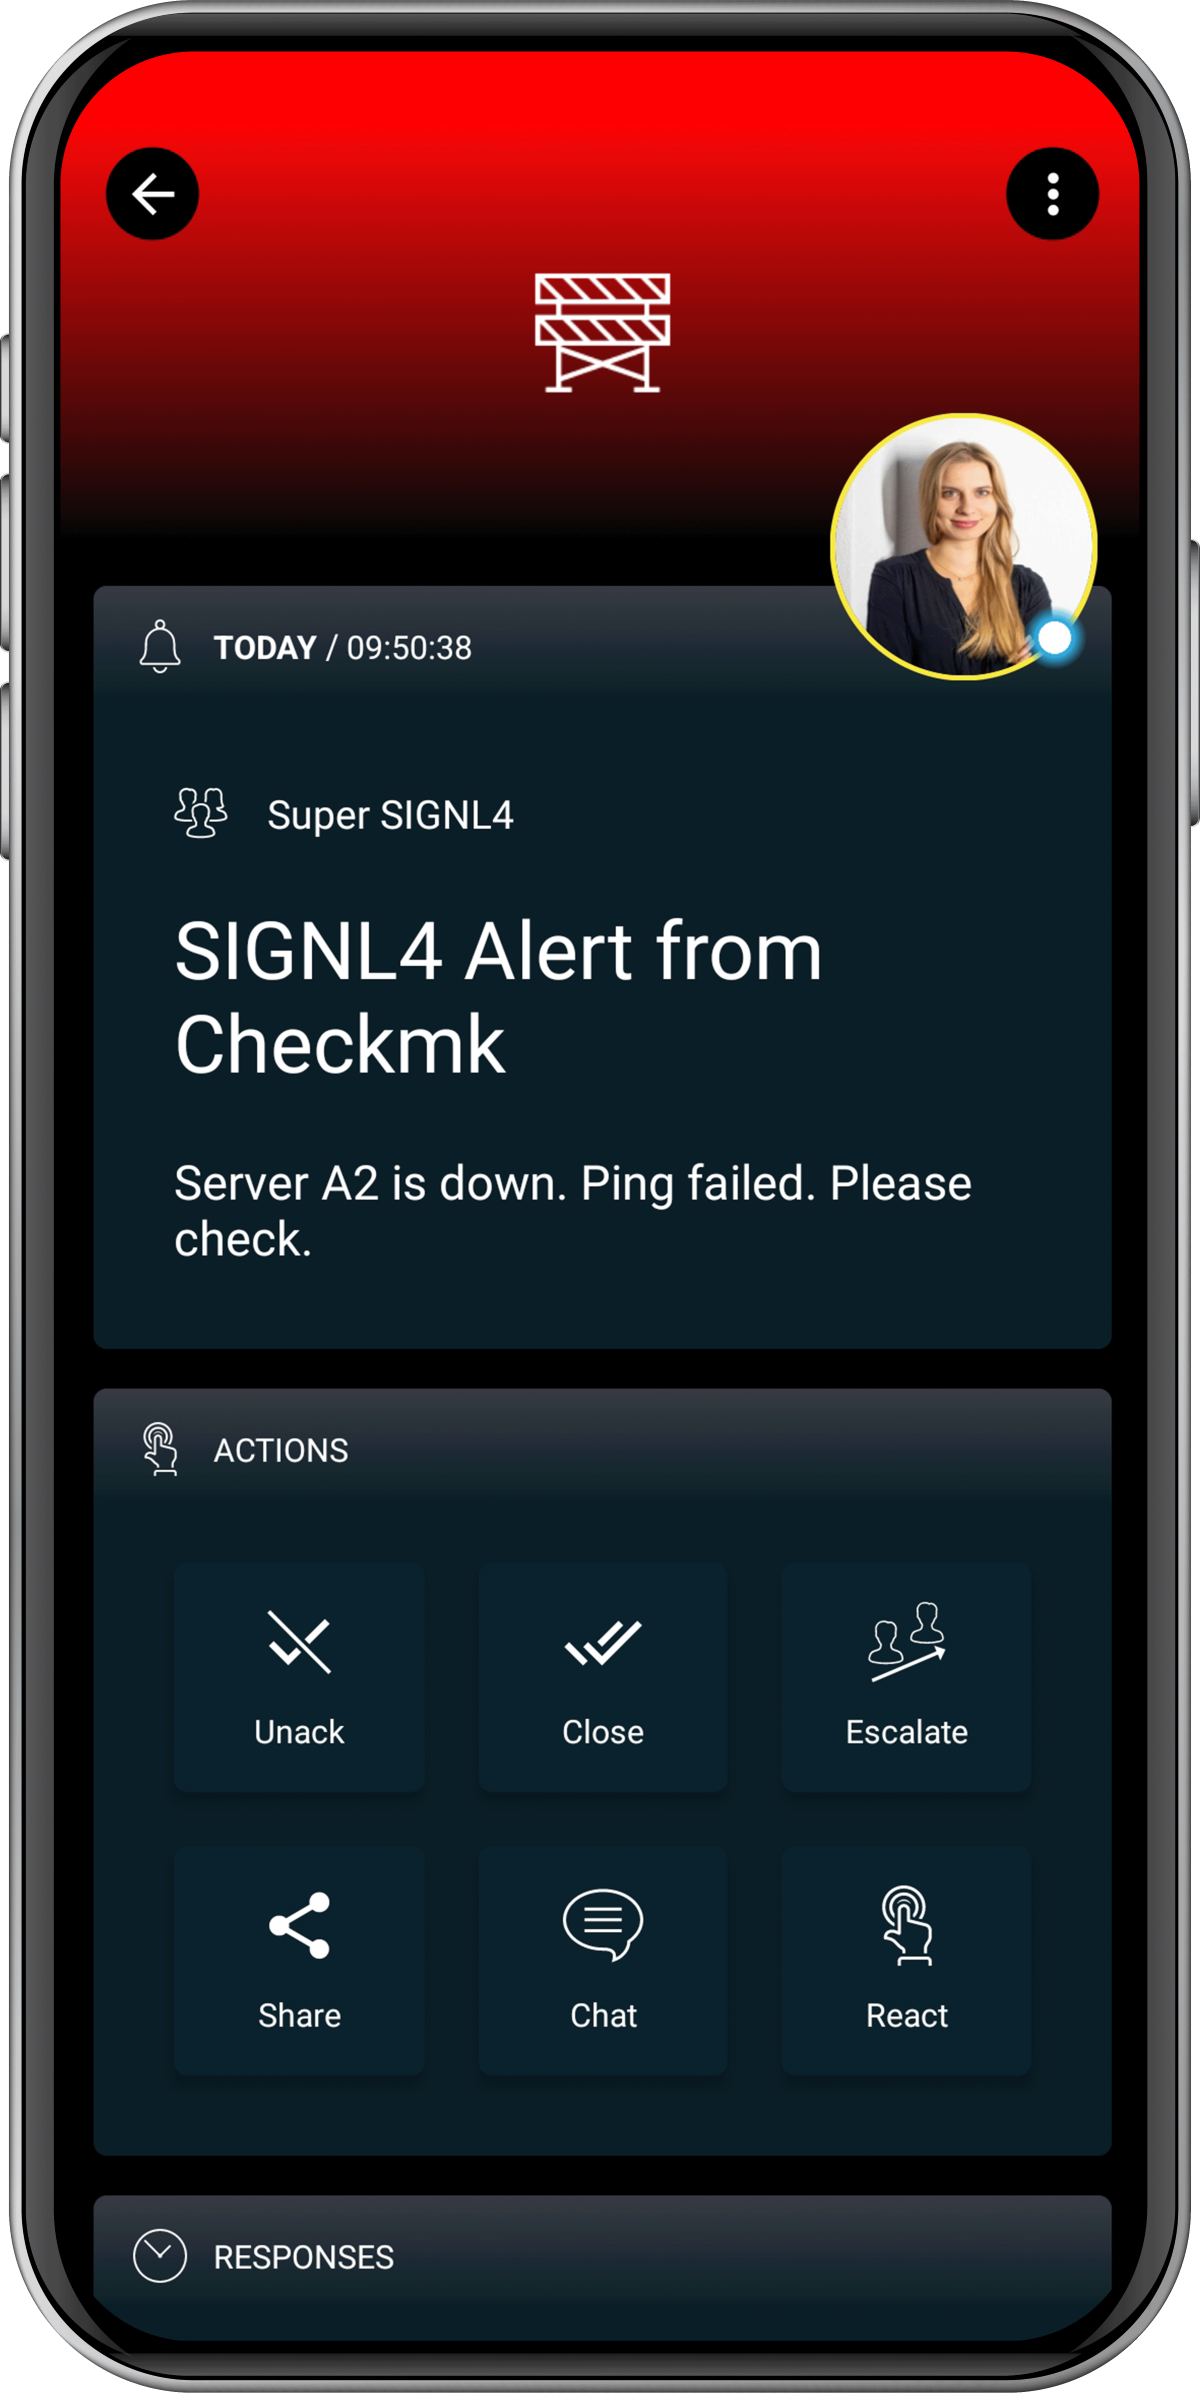 SIGNL4 Alert with Checkmk